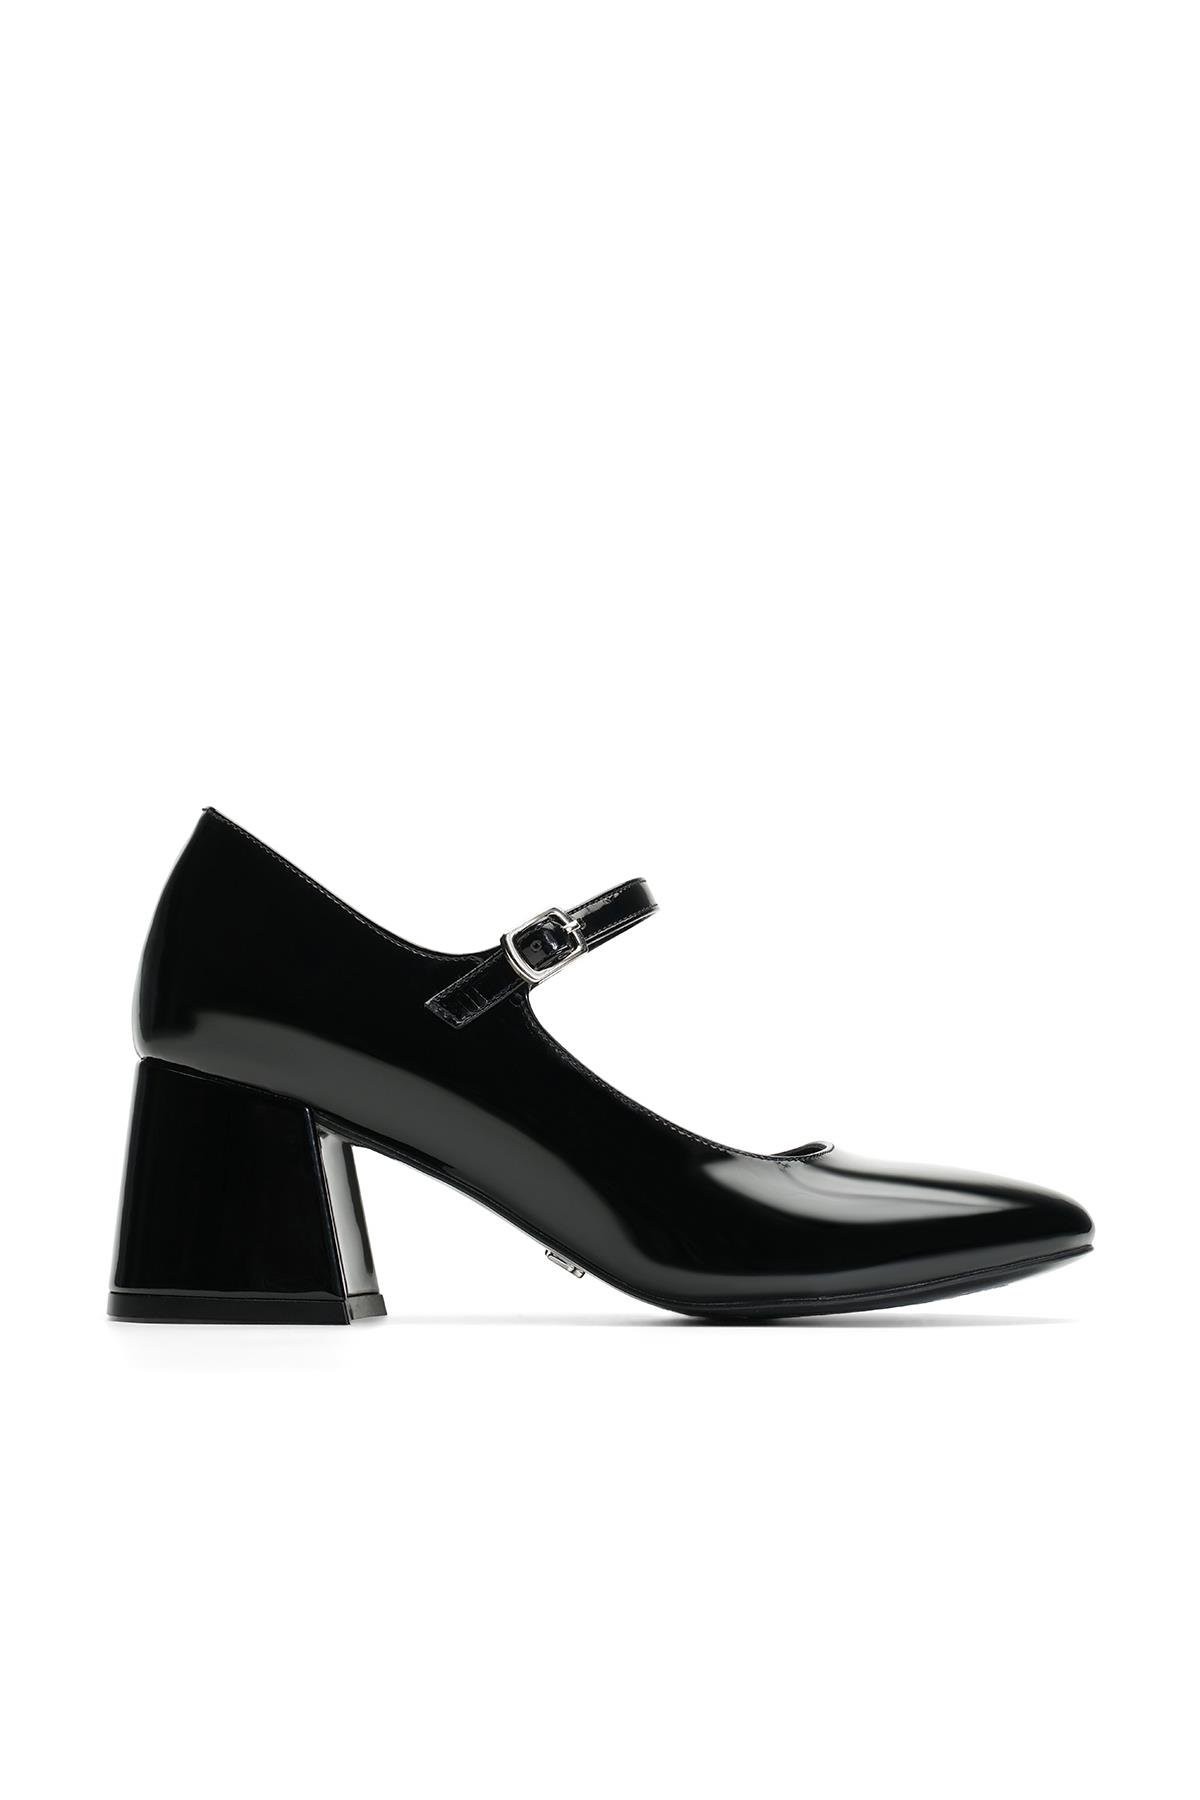 Jabotter Claudia Black Patent Leather 6 Cm Heeled Shoes